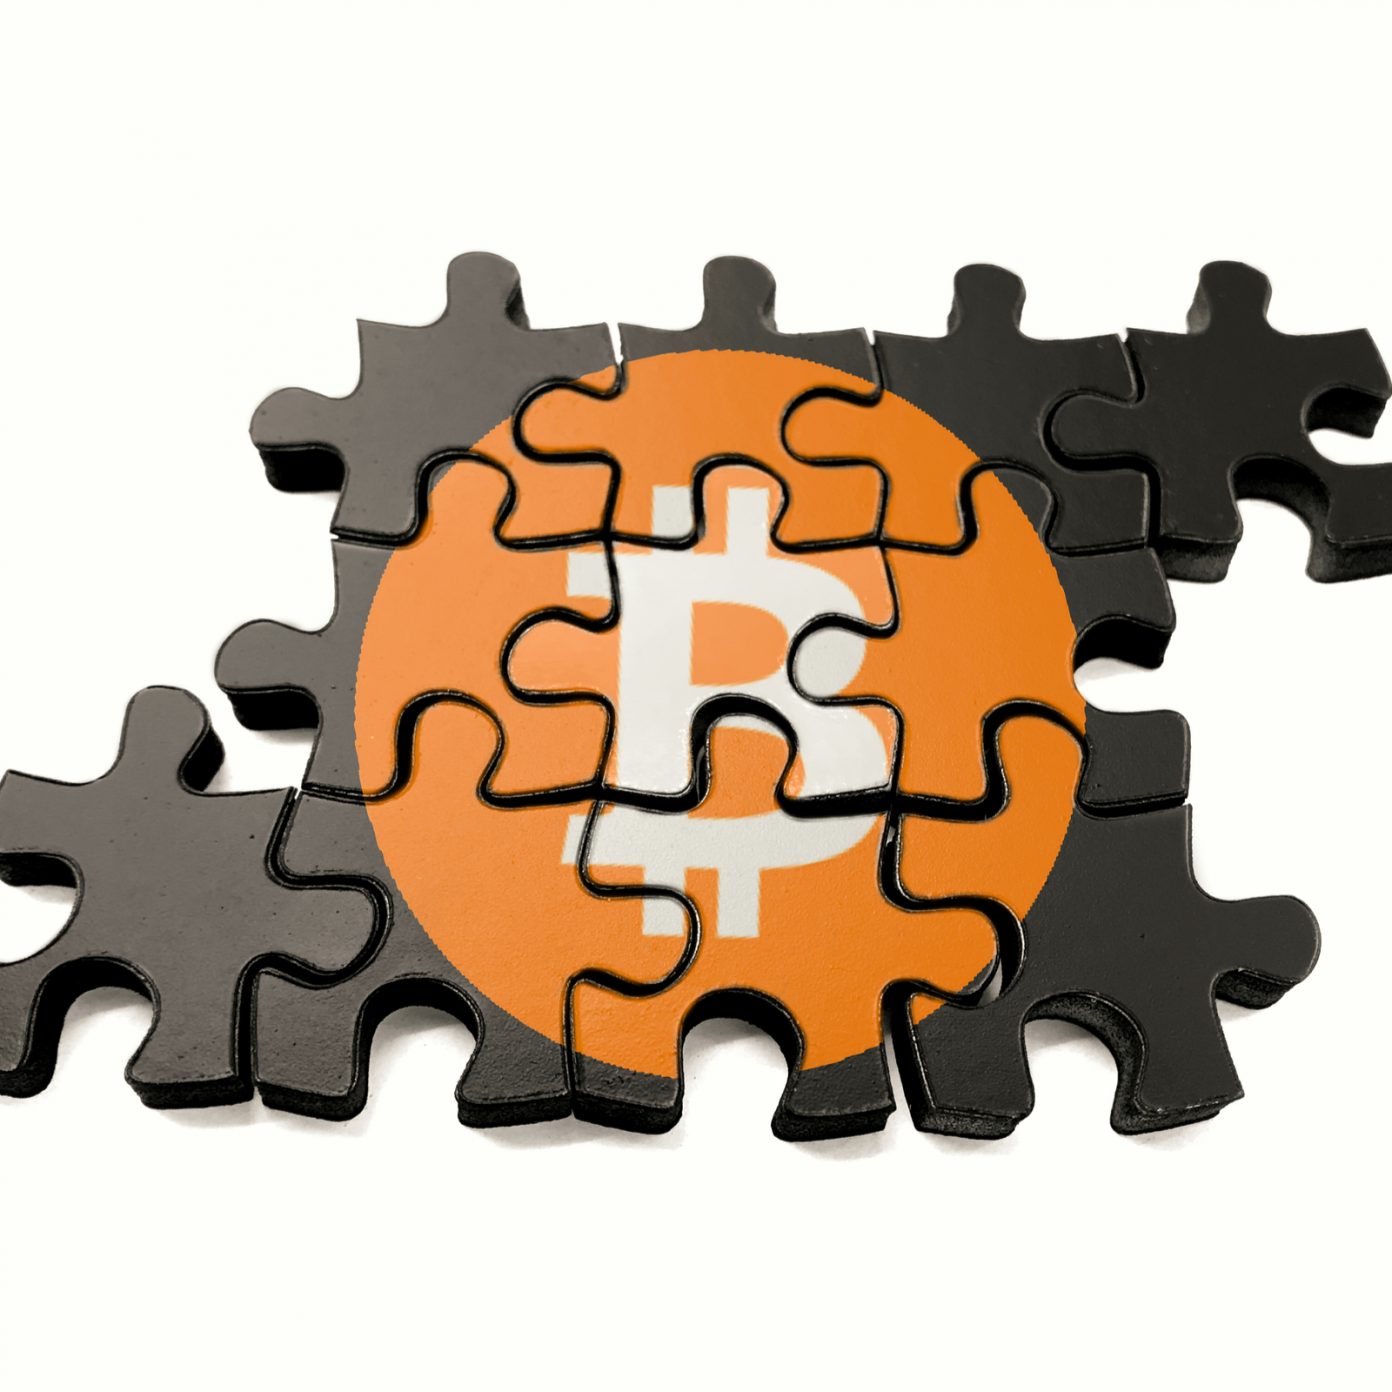 bitcoin mathematical puzzle